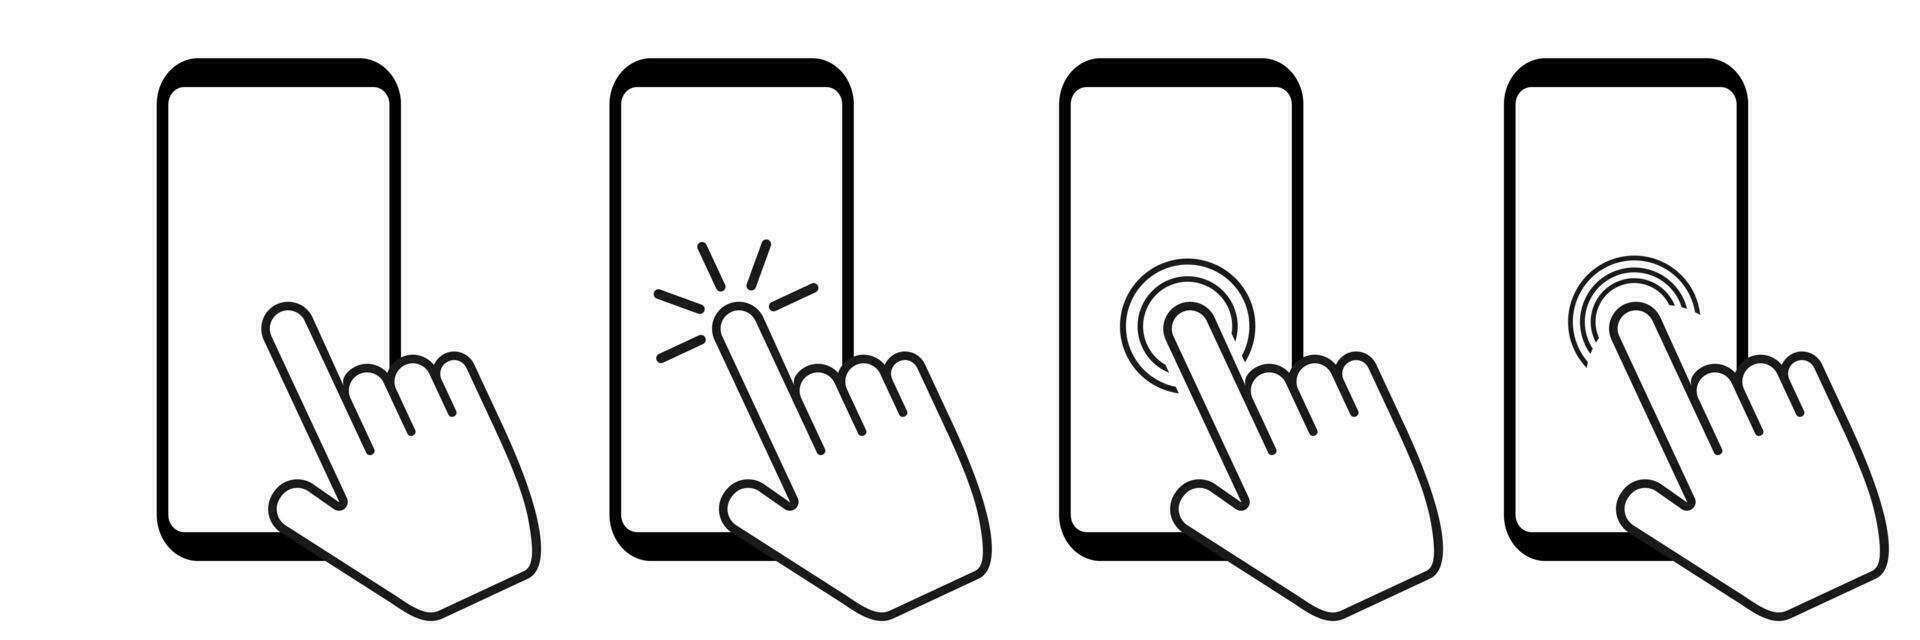 teléfono inteligente pantalla con haciendo clic dedo. toque monitor con mano en blanco antecedentes. aislado móvil dispositivo con grifo símbolo. elección cursor pictograma recopilación. vector colocar. eps 10